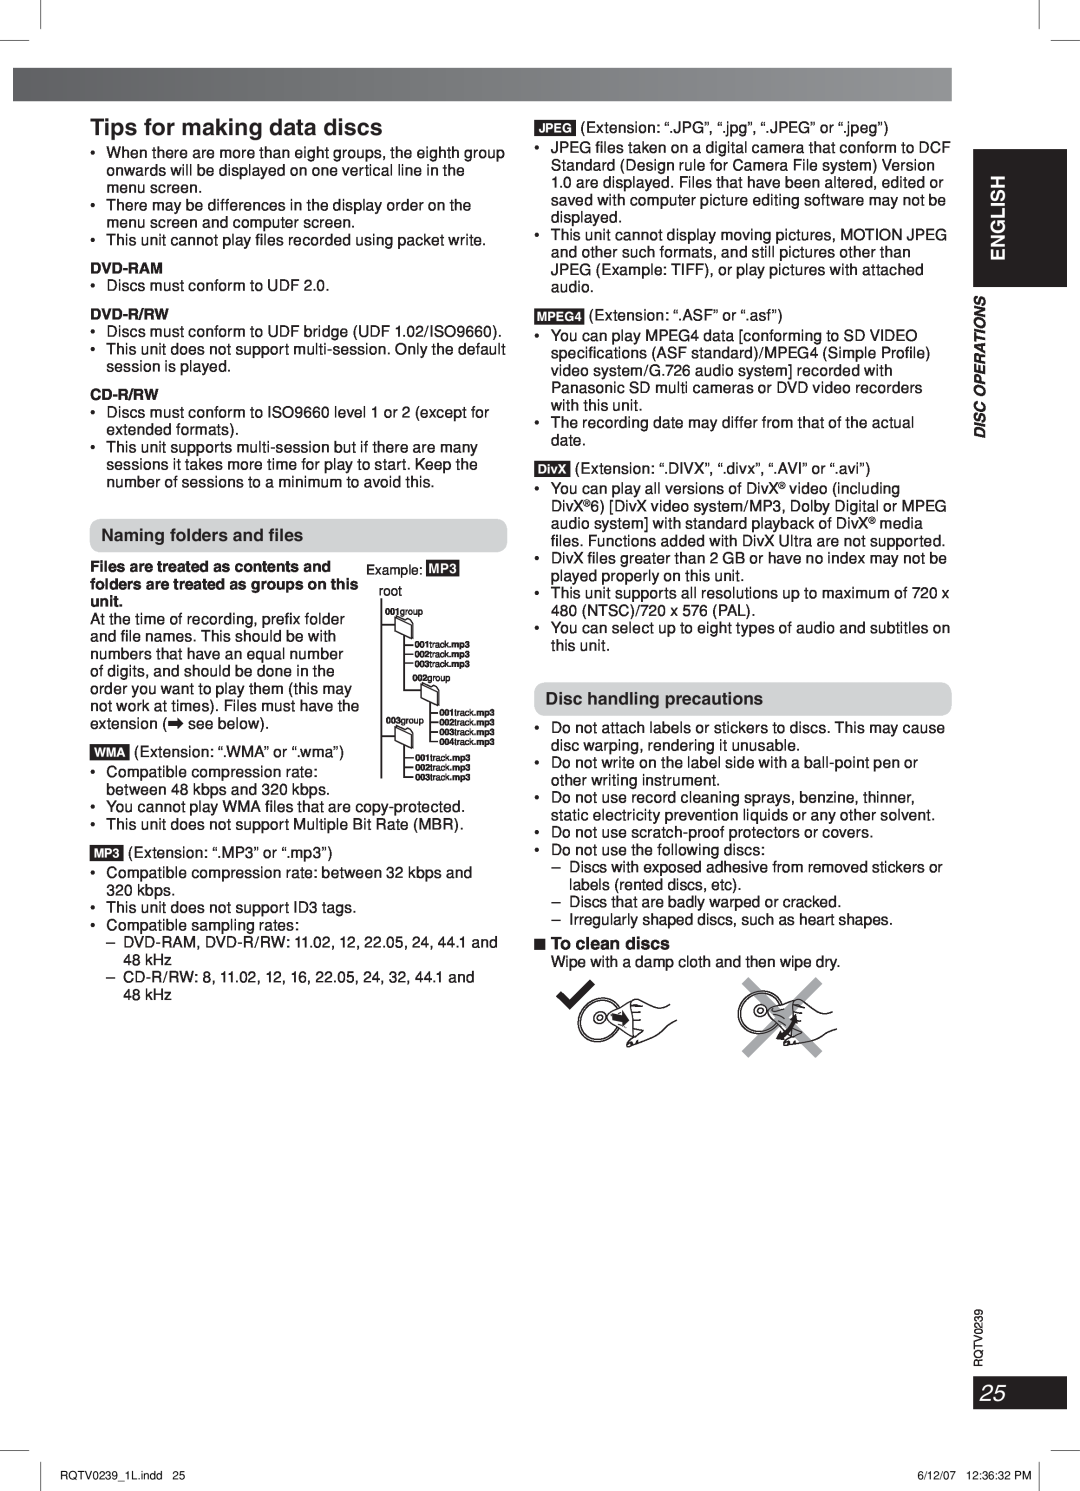 Panasonic SC-VK860 manual Tips for making data discs, Naming folders and ﬁles, Disc handling precautions, To clean discs 